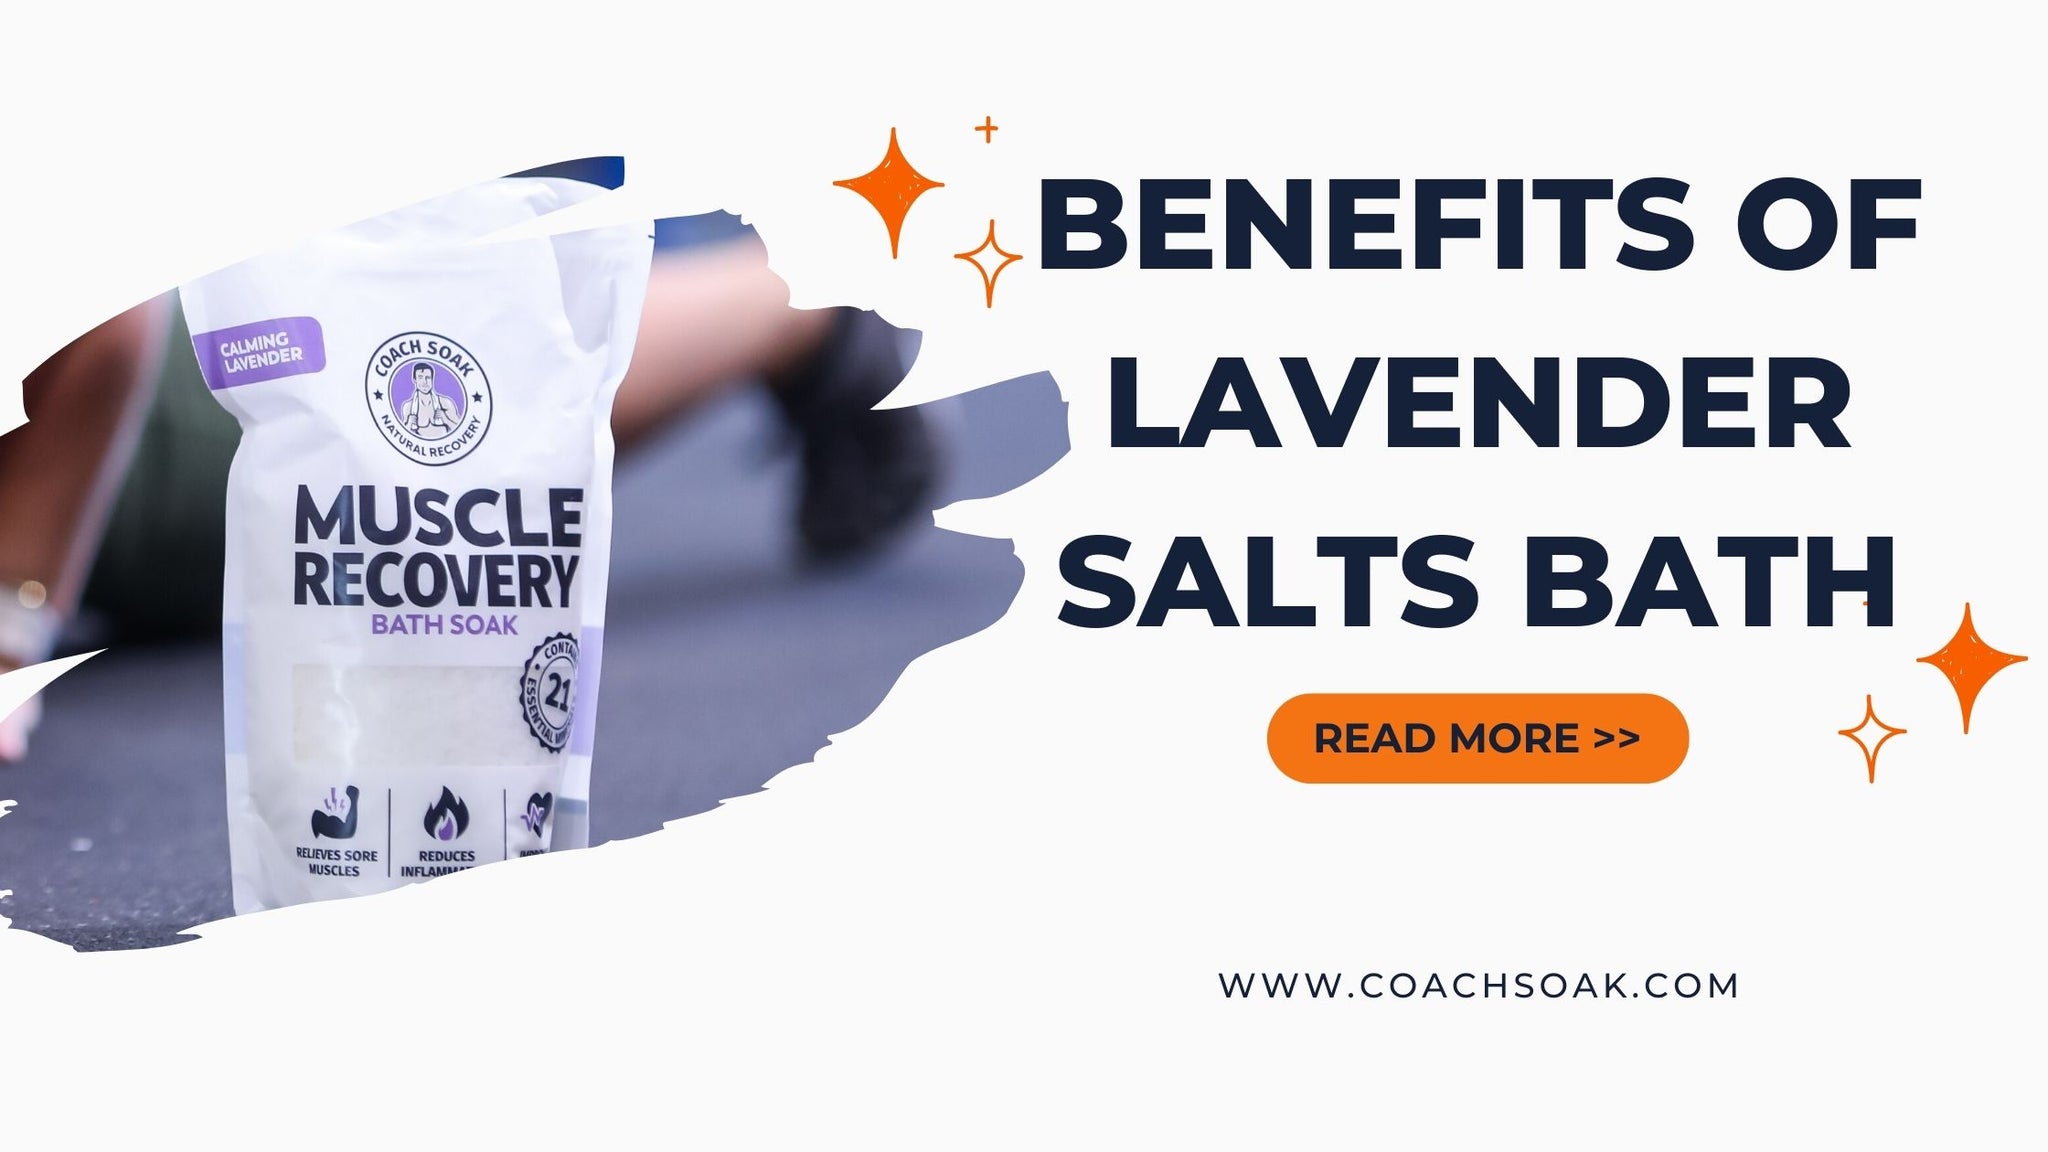 Benefits of Lavender Salts Bath with DIY Recipes